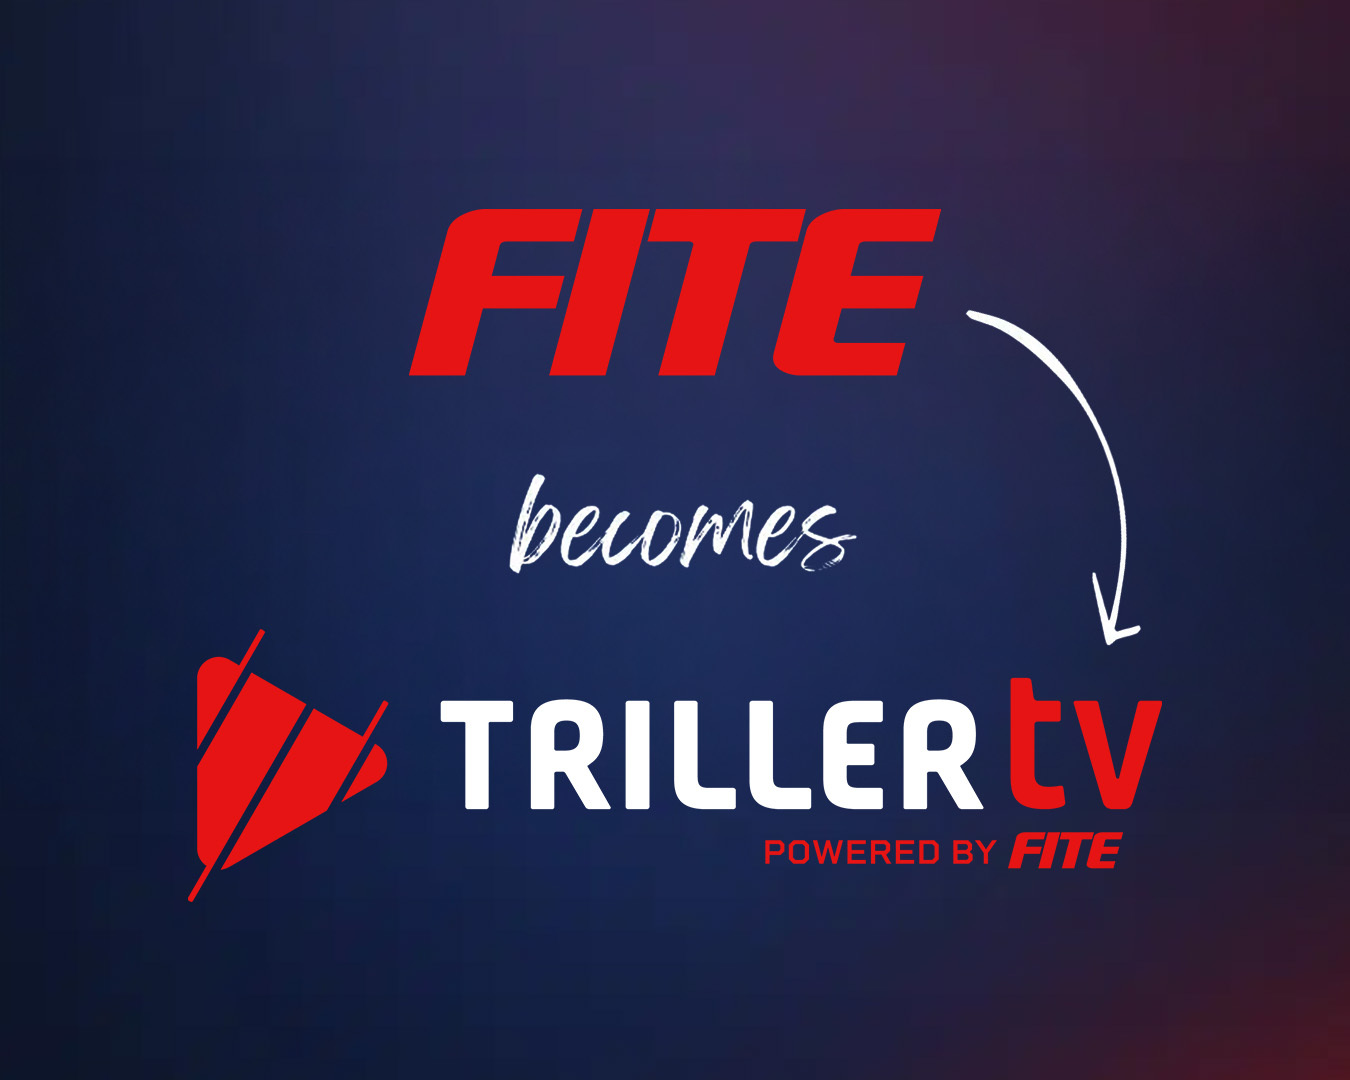 FITE becomes TrillerTV